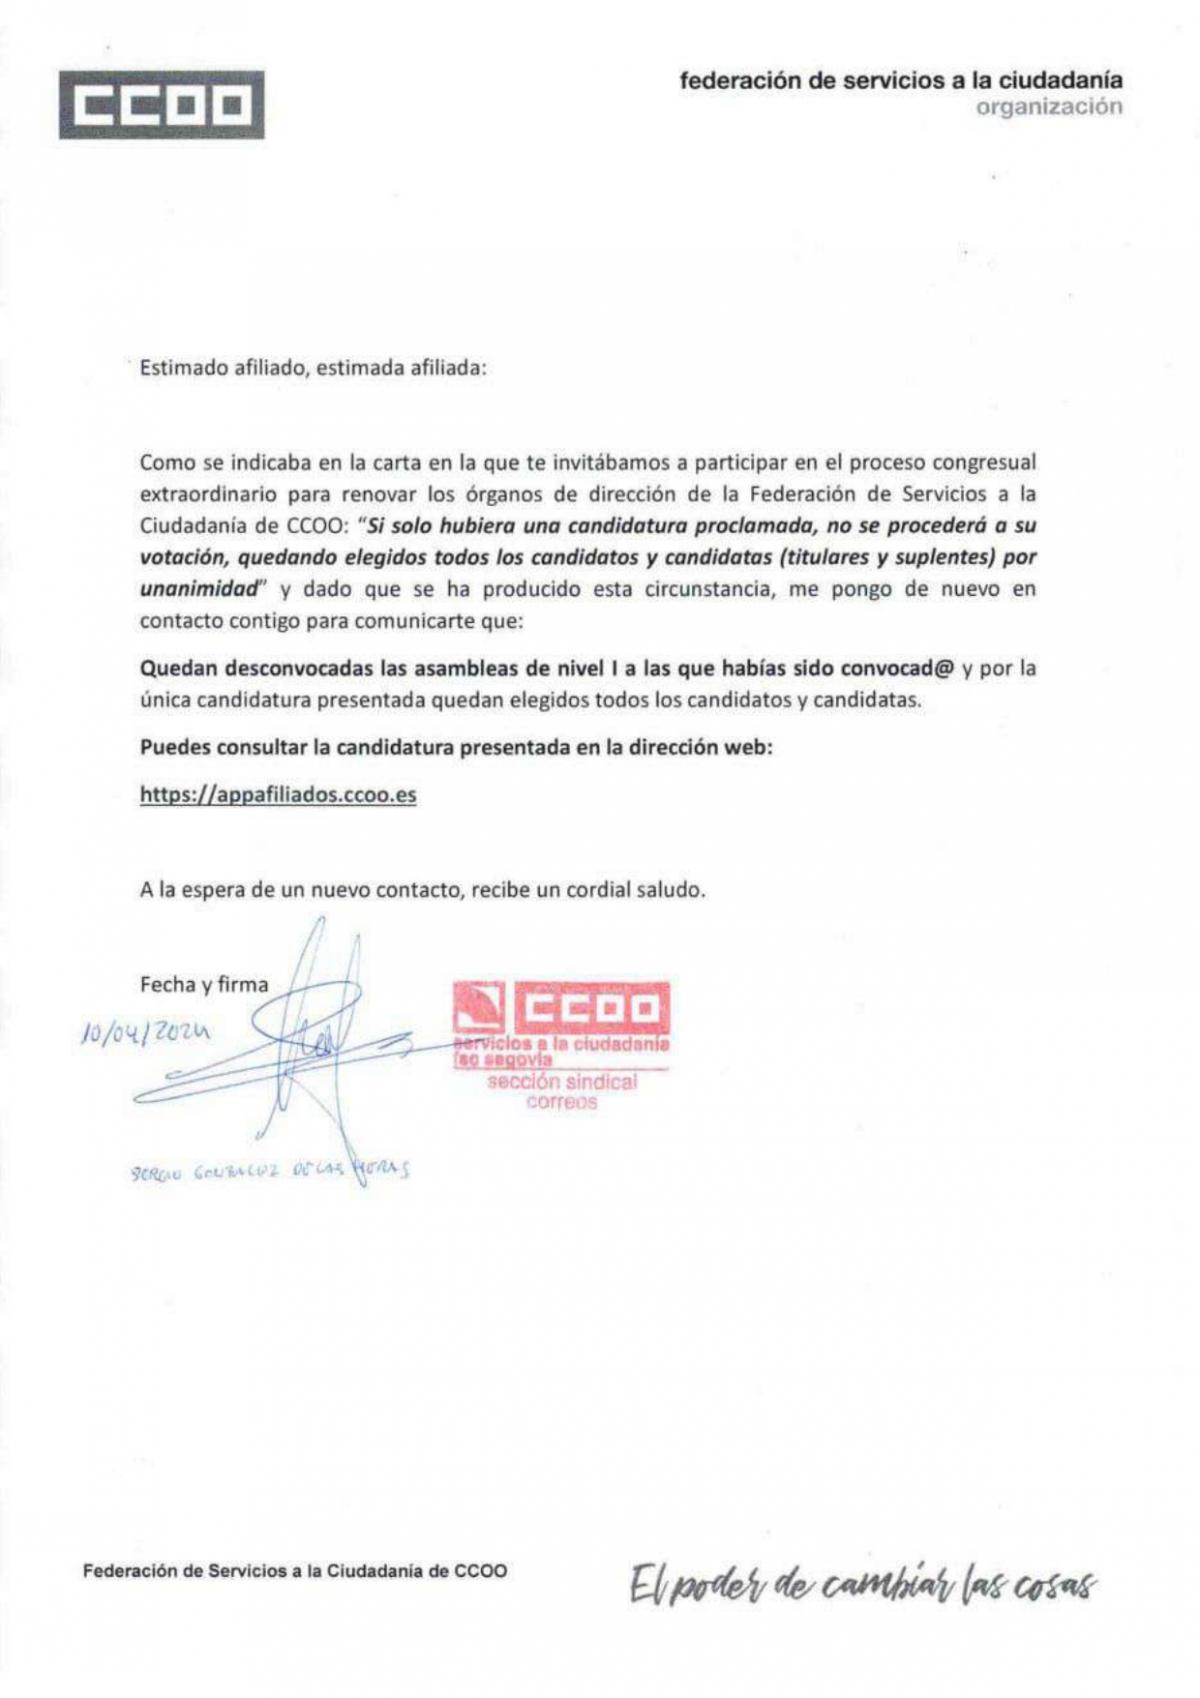 Proclamadas candidaturas Asamblea NI Seccin Sindical Segovia